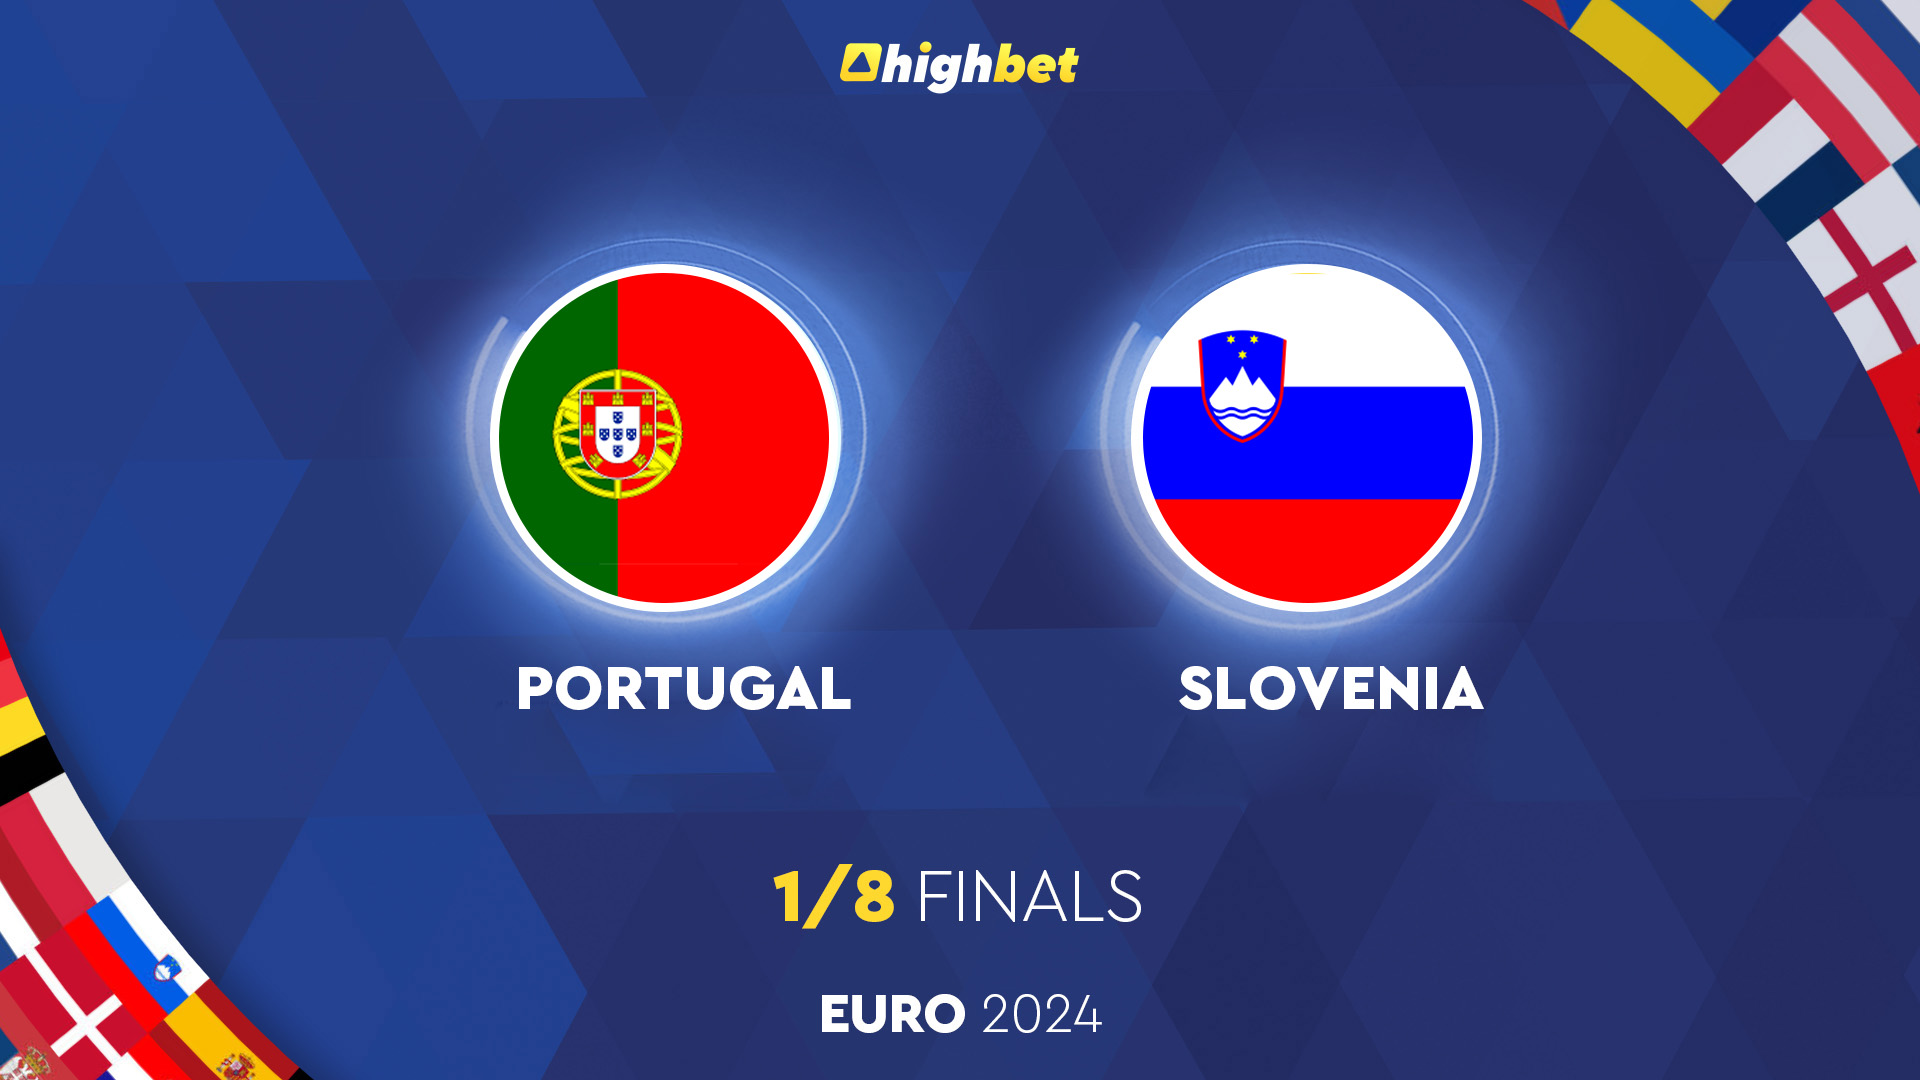 Portugal vs Slovenia - Euro 2024 - HighBet Blog